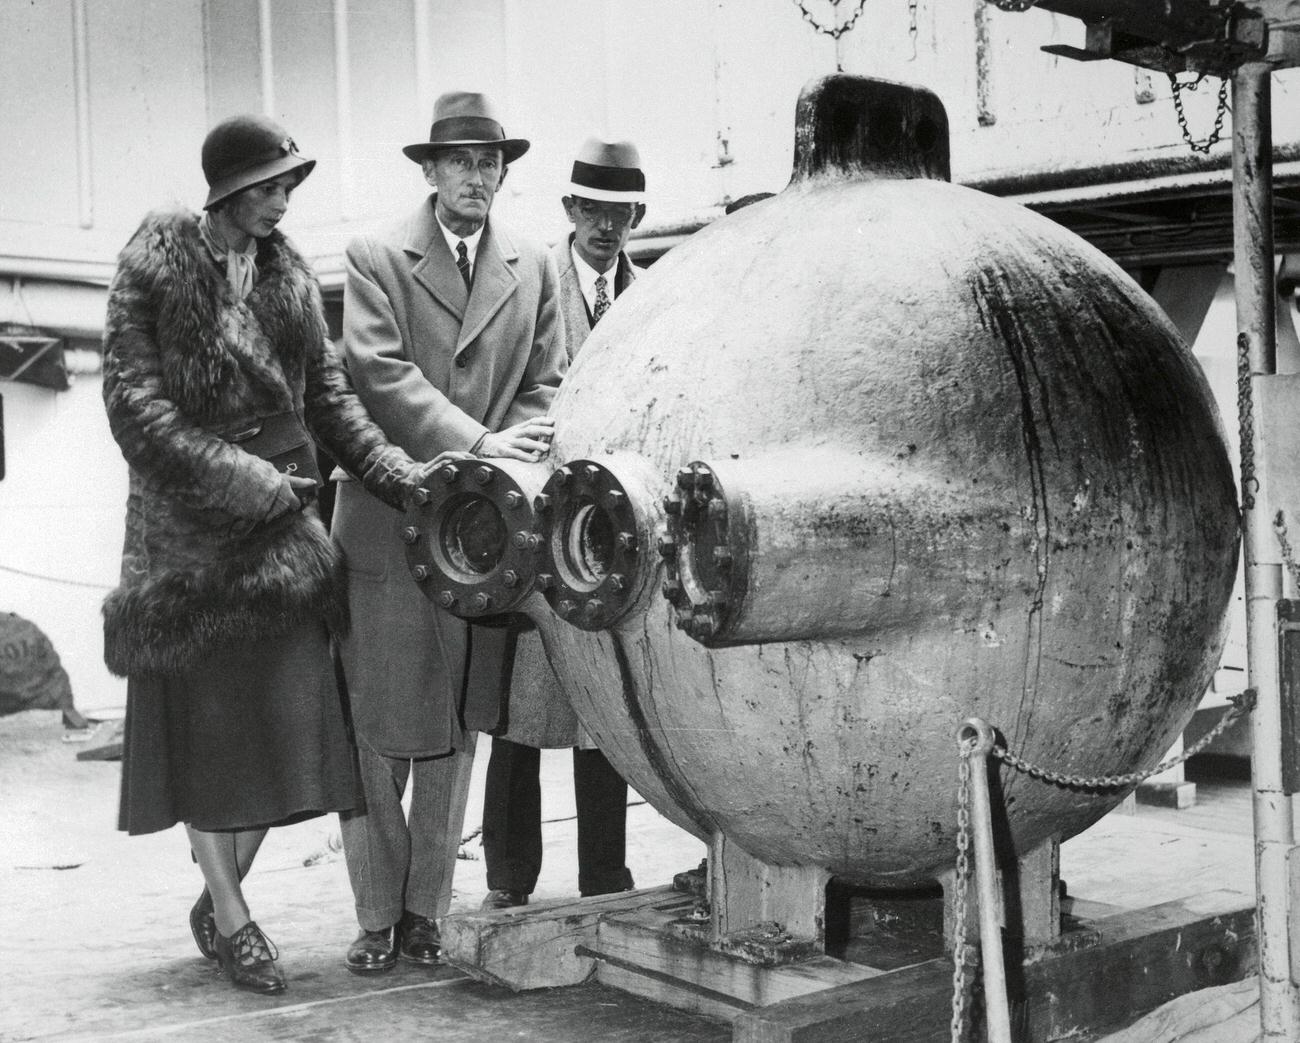 William Beebe with bathysphere and team members Gloria Hollister and John Teevan, New York, 1930s.